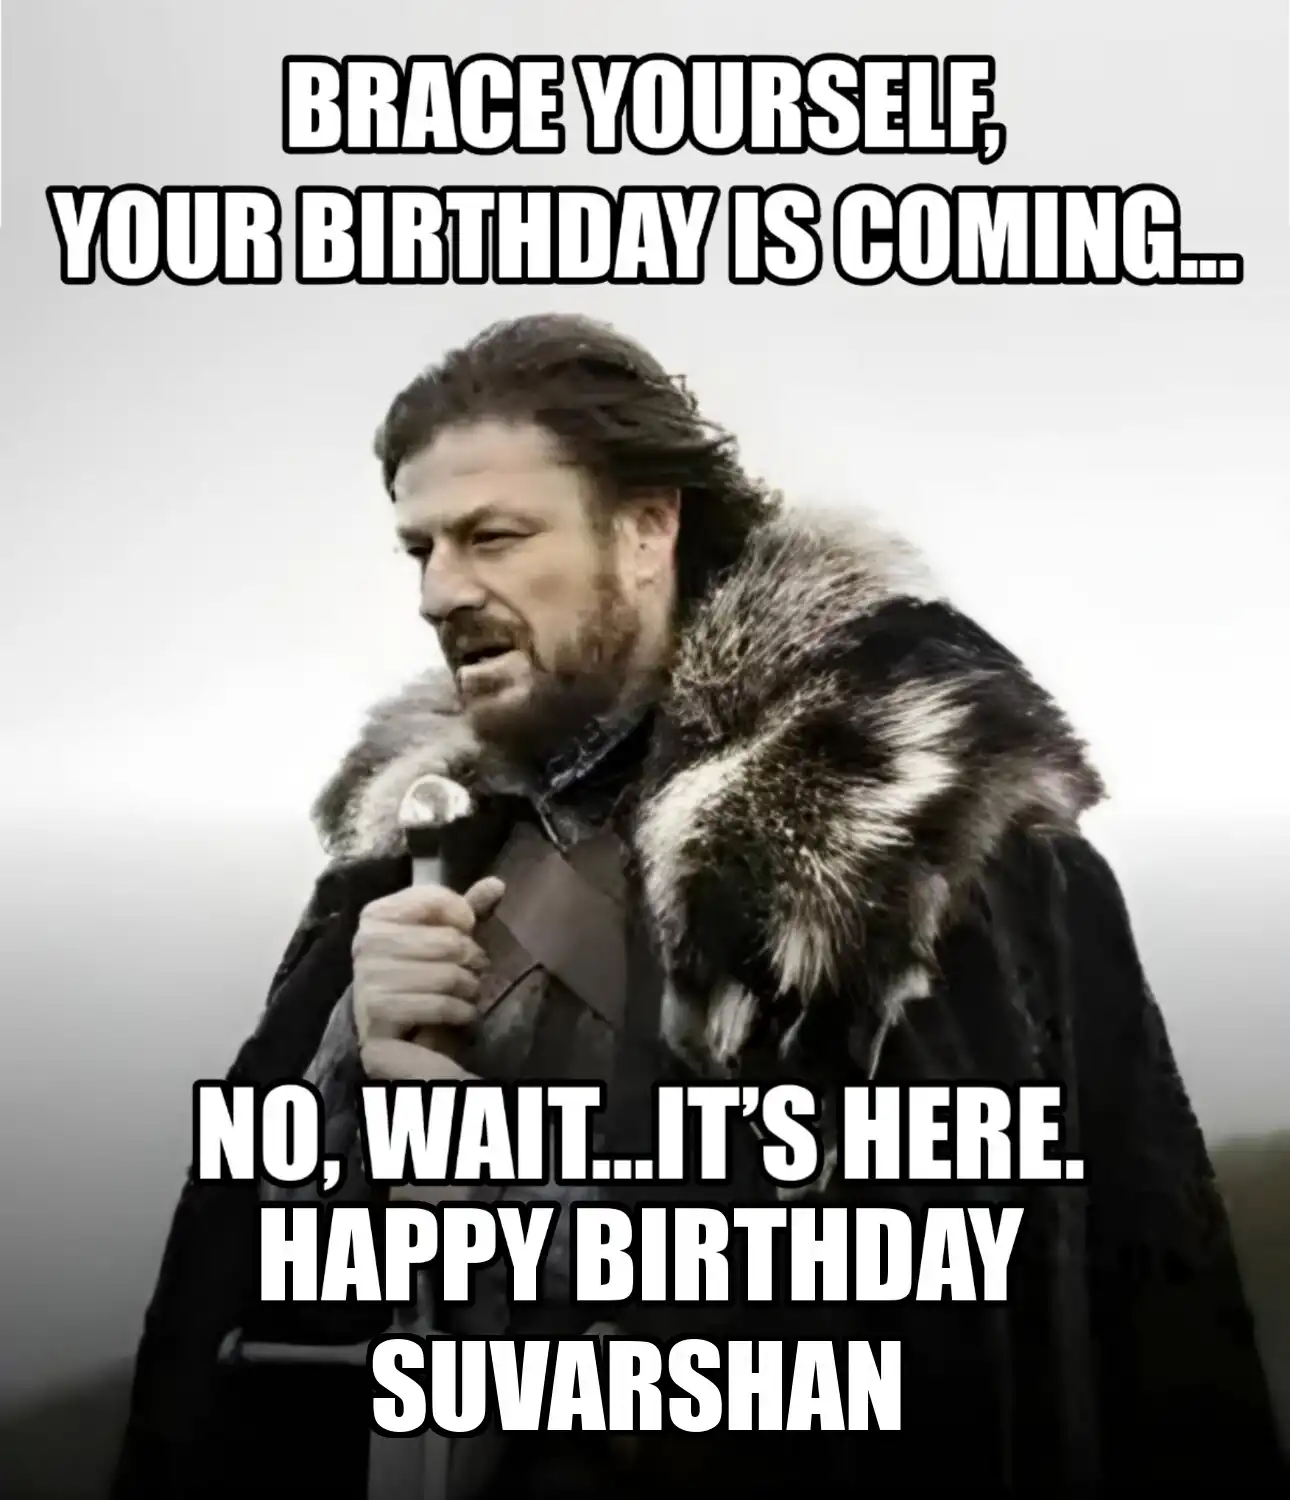 Happy Birthday Suvarshan Brace Yourself Your Birthday Is Coming Meme